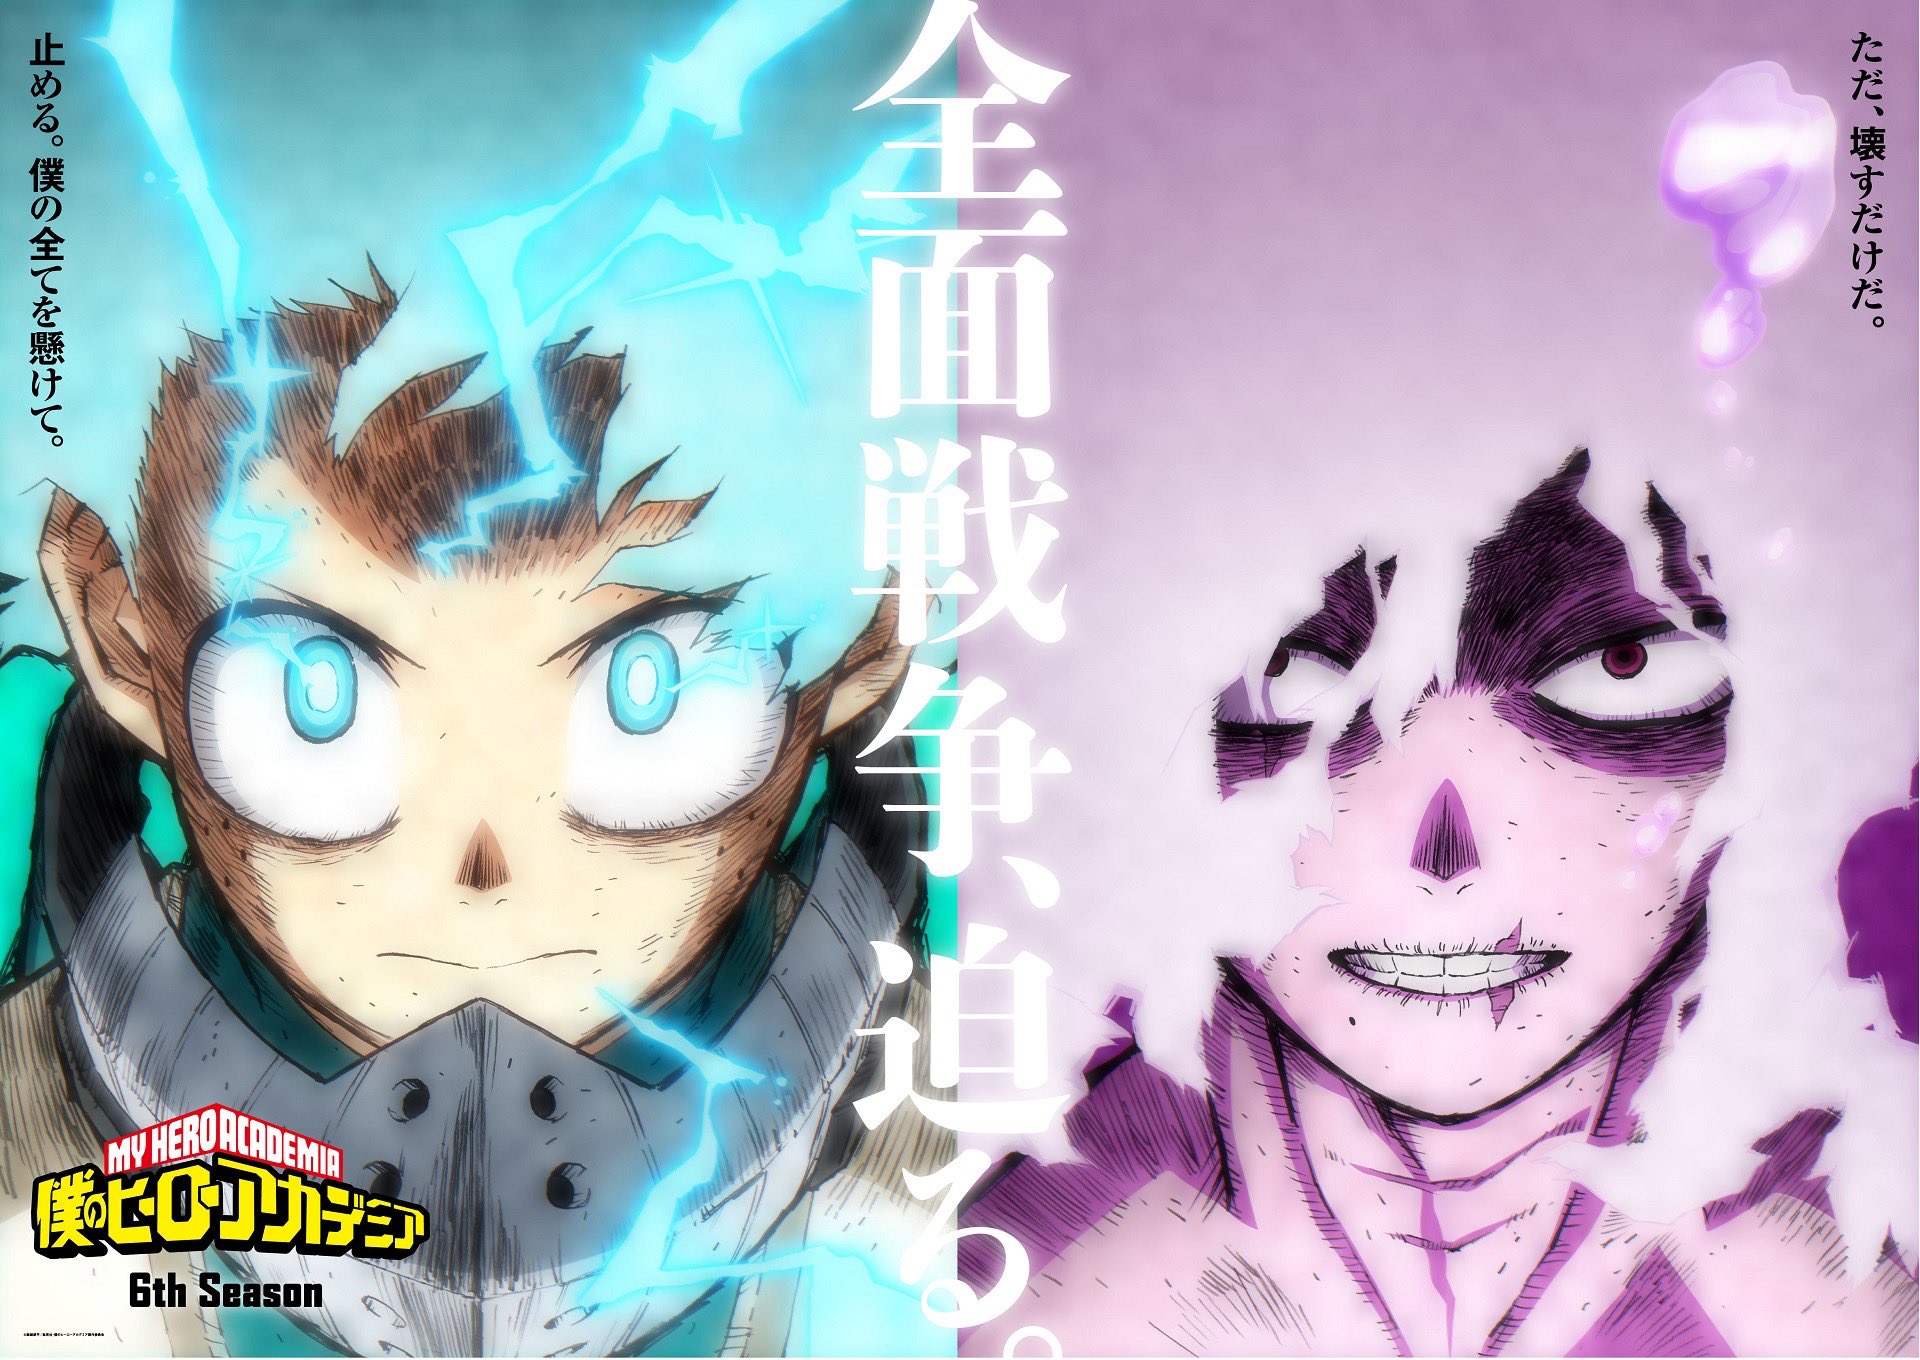 Deku and Shigaraki My Hero Academia Season 6 visual